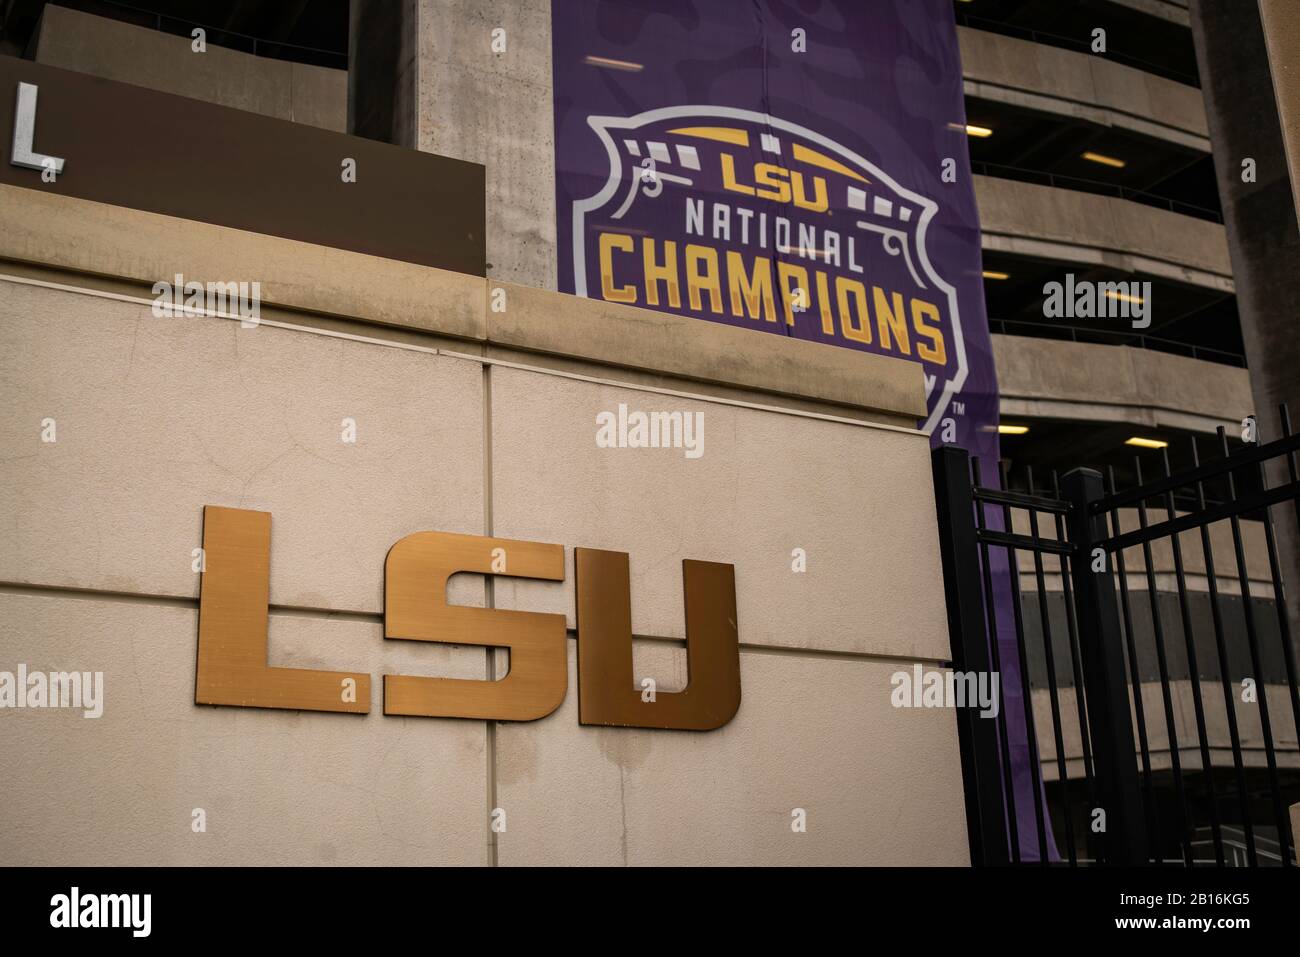 Baton Rouge, Louisiana - February 10, 2020: Louisiana State University (LSU) sign with National Champions banner Stock Photo